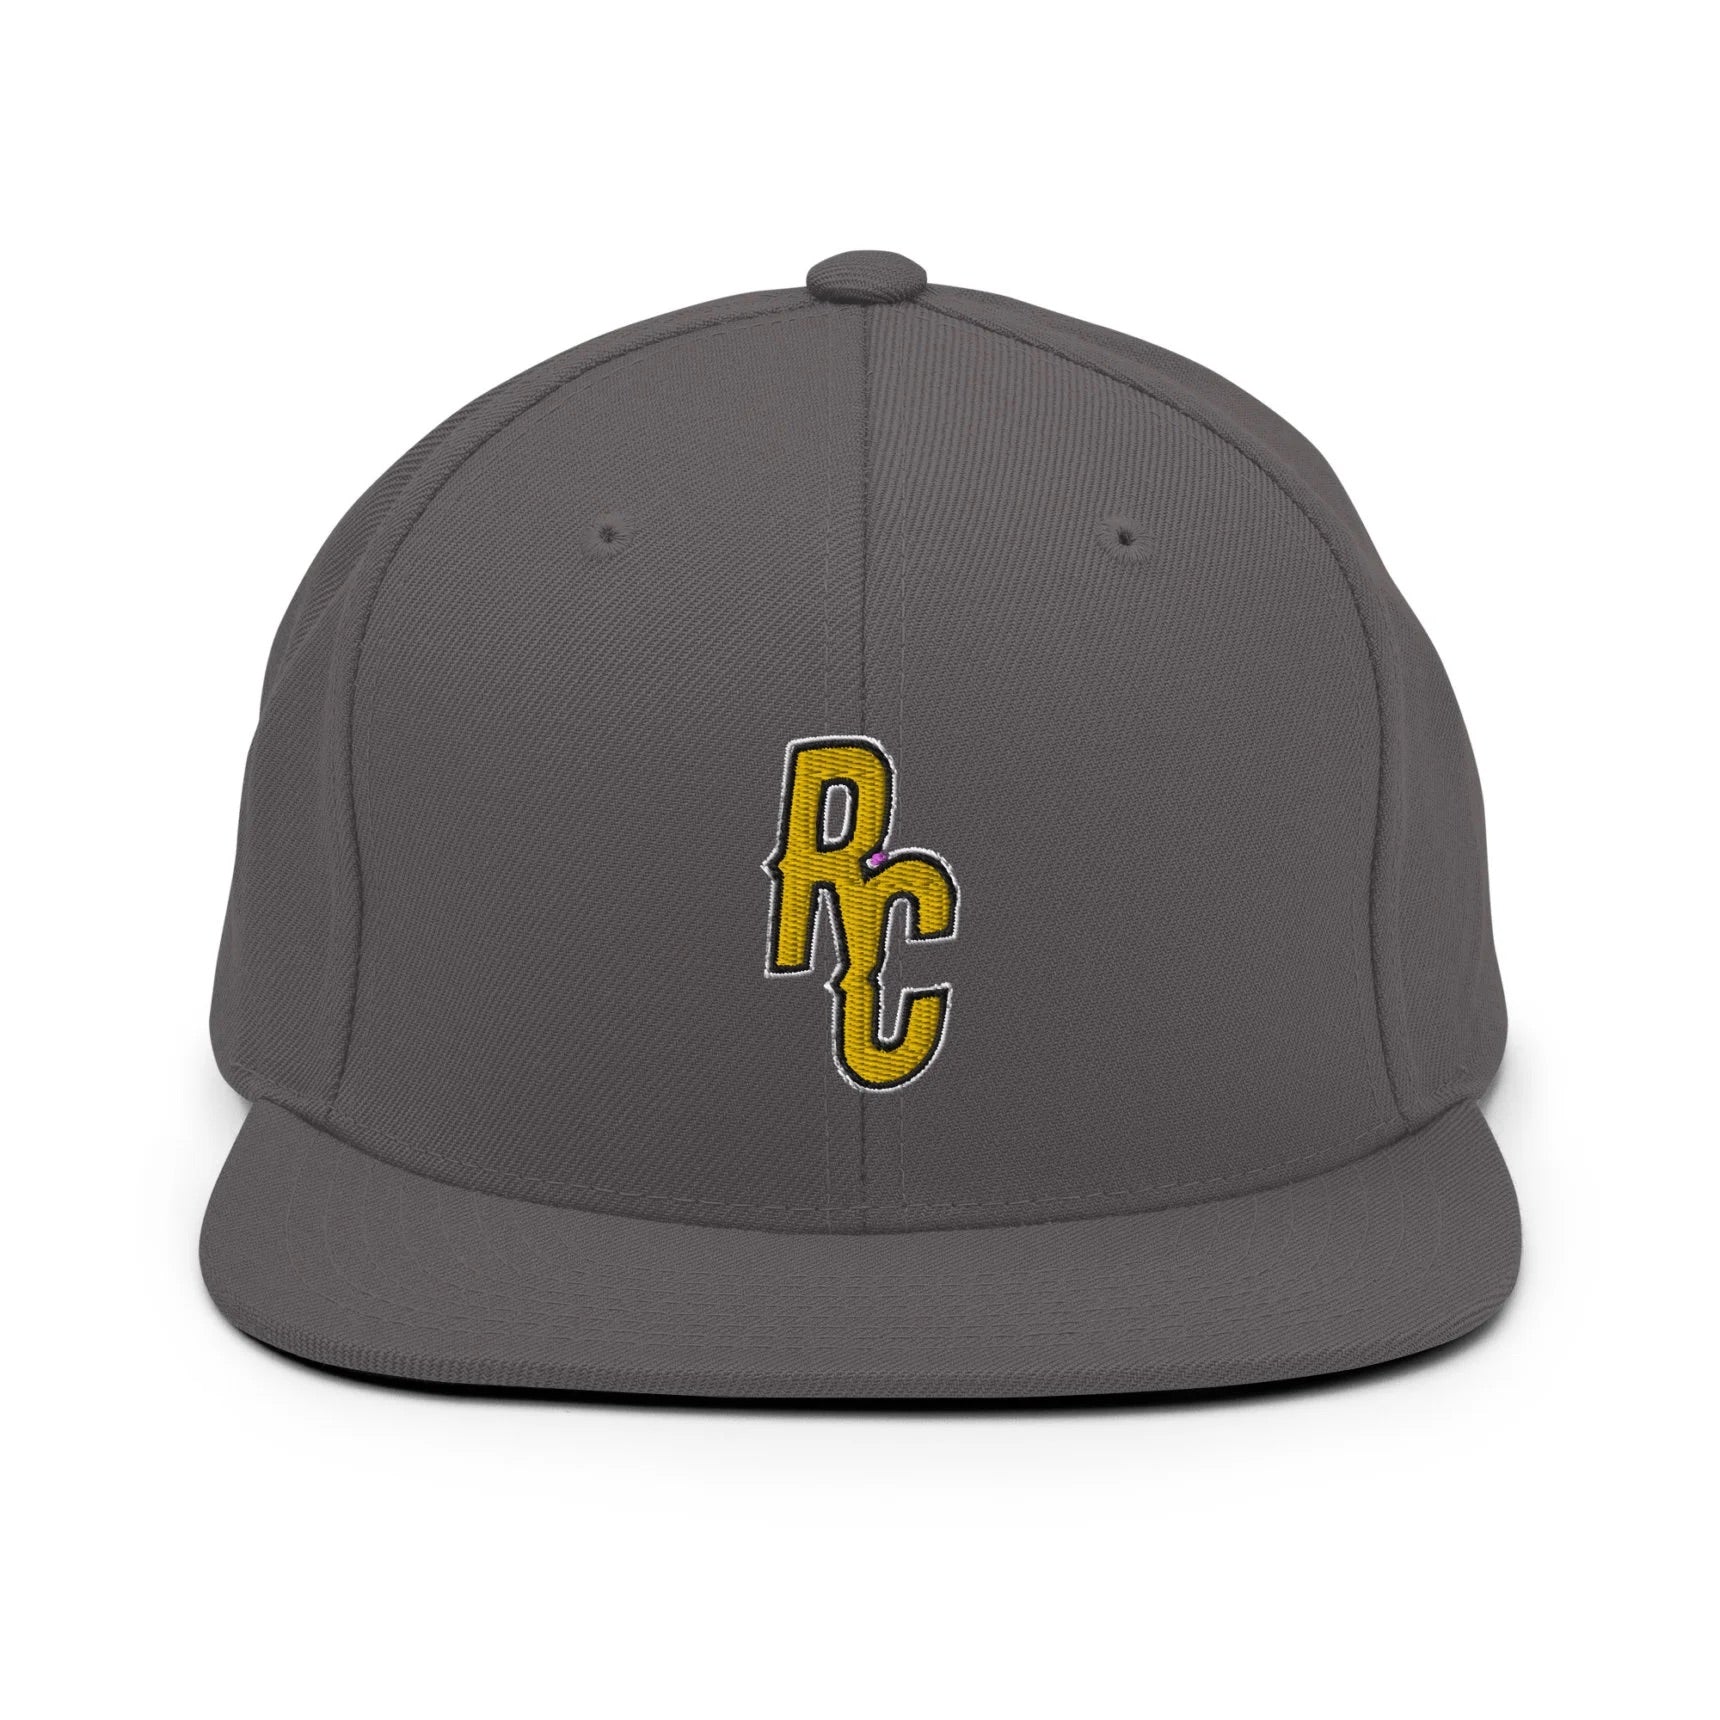 Ray Cheesy ShowZone snapback hat in dark grey